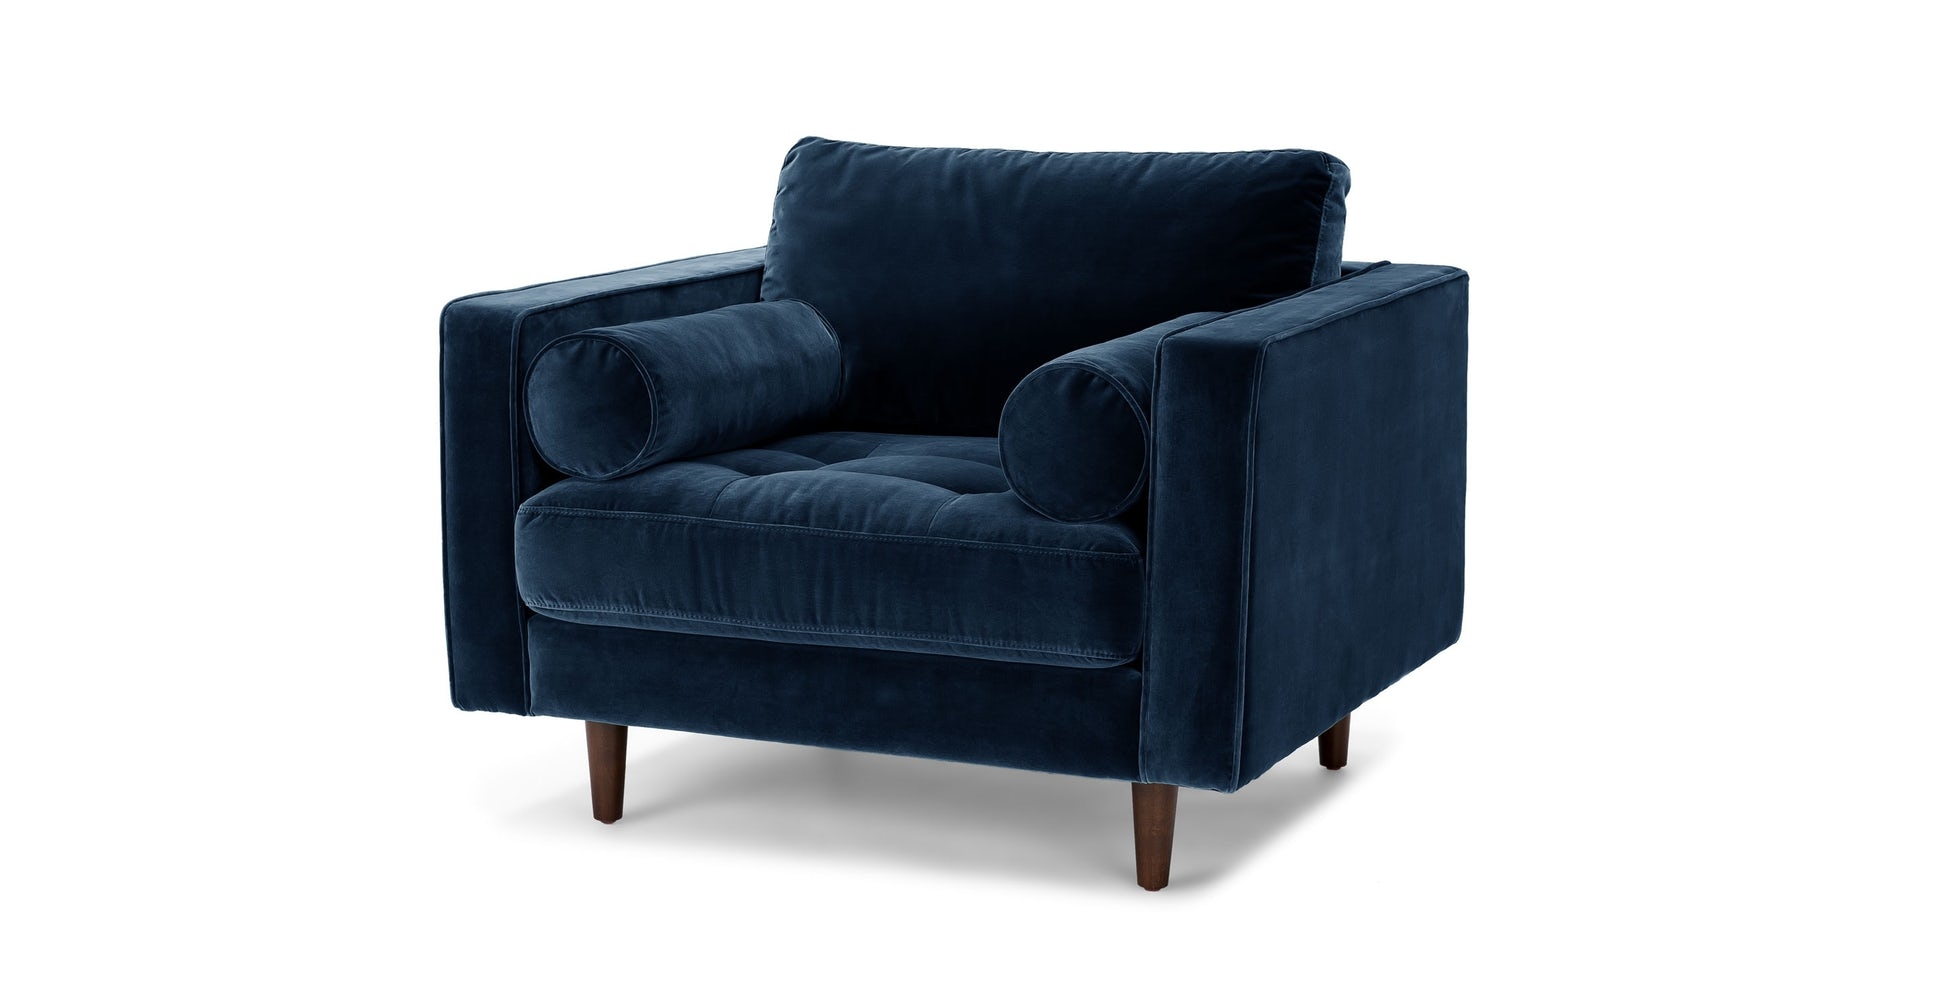 Sven Cascadia Blue Chair - Image 2